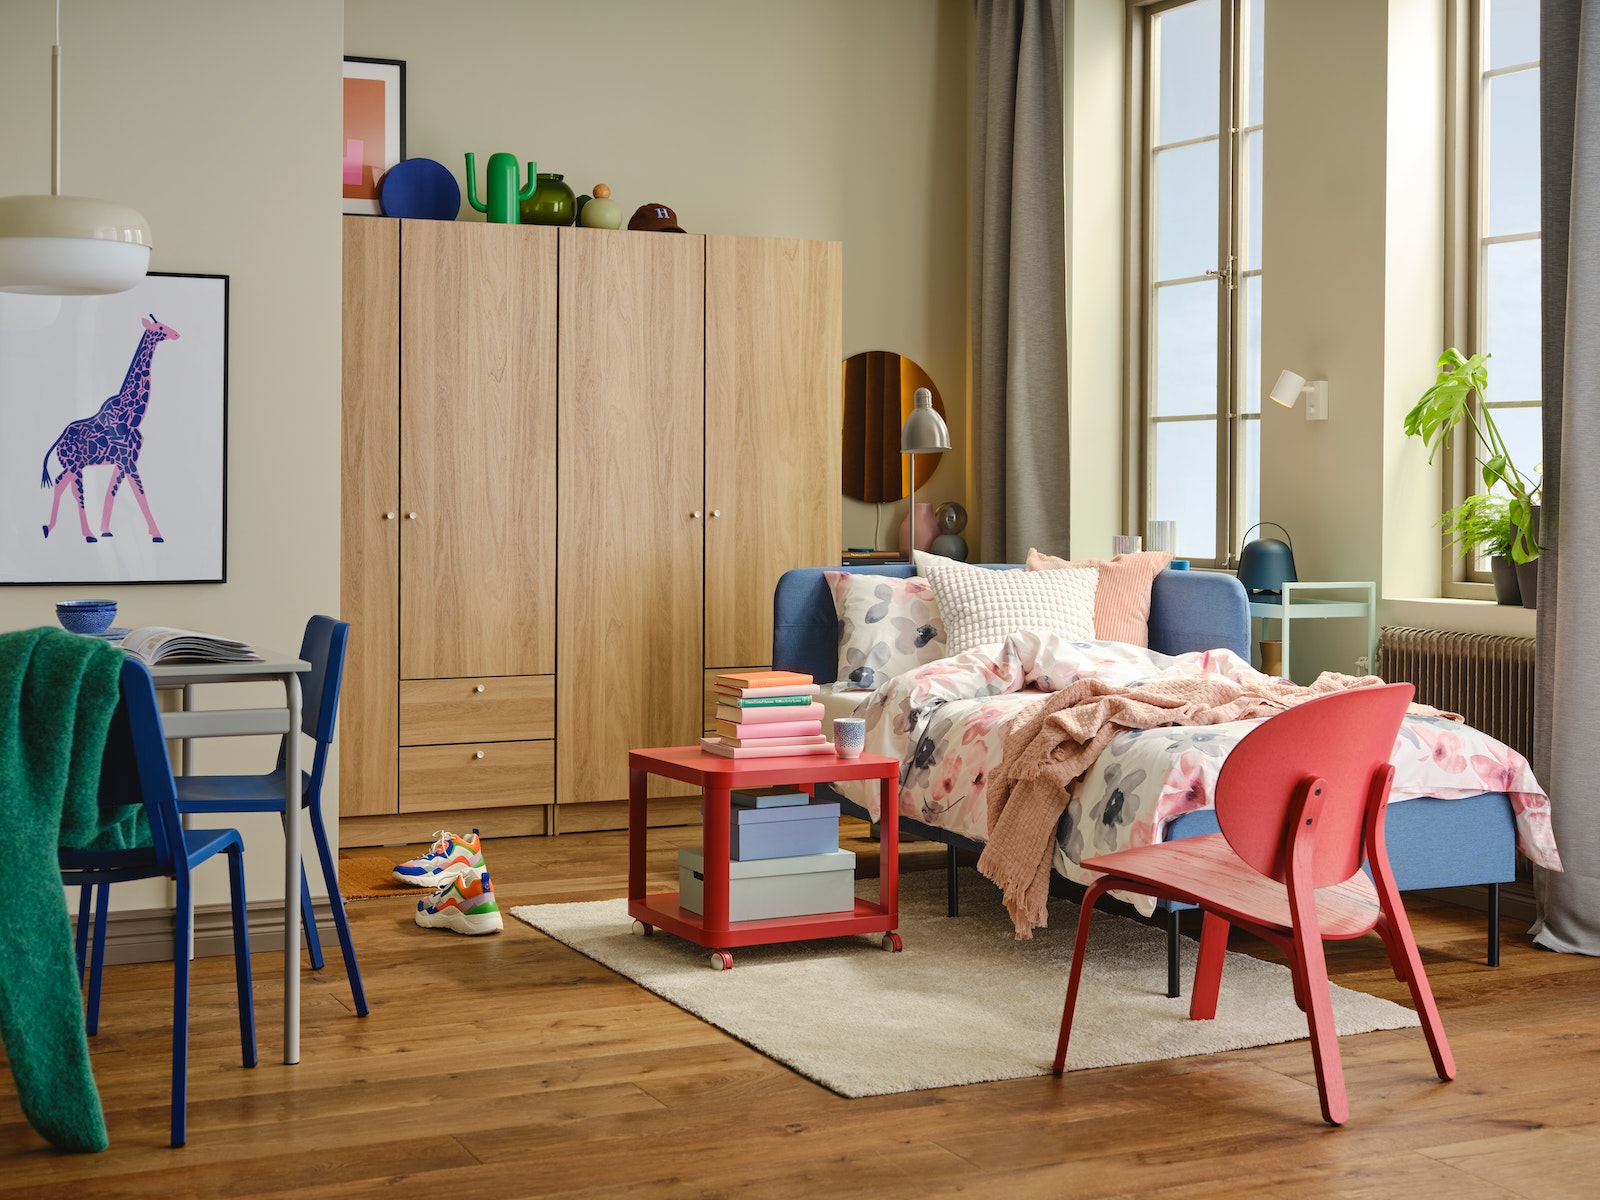 IKEA - An uplifting studio bedroom with effortless style